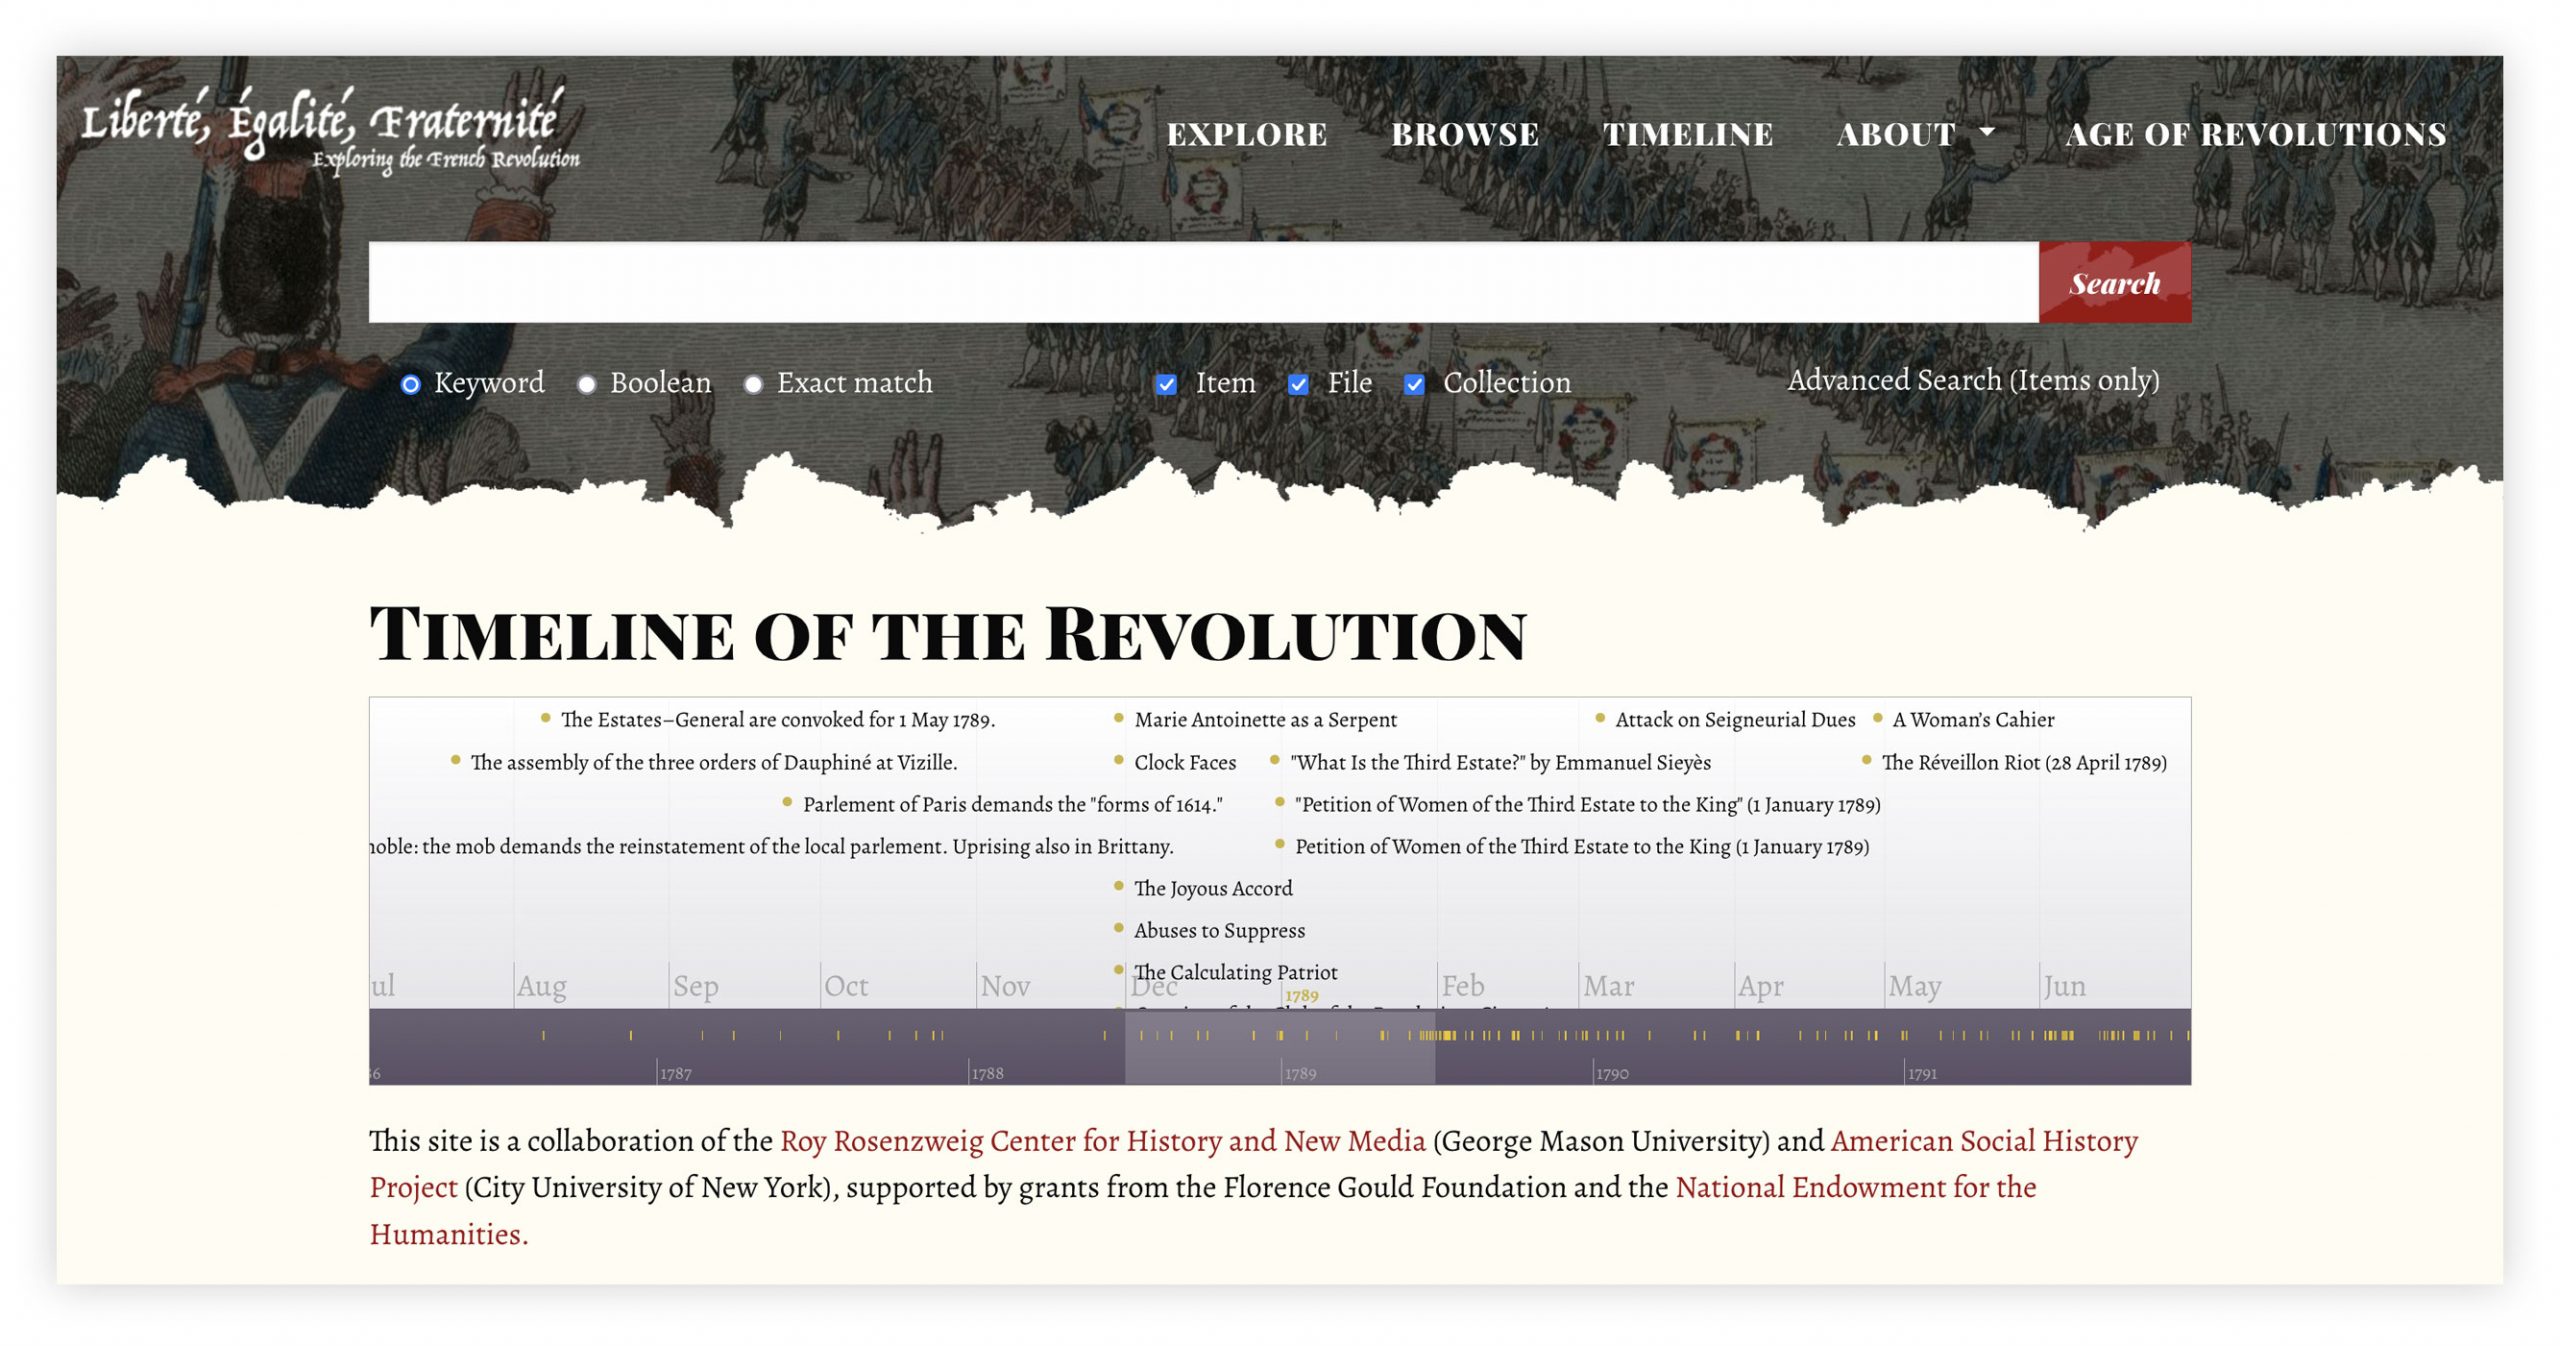 Screengrab of the Liberte, Egalite, Fraternite website Timeline page.